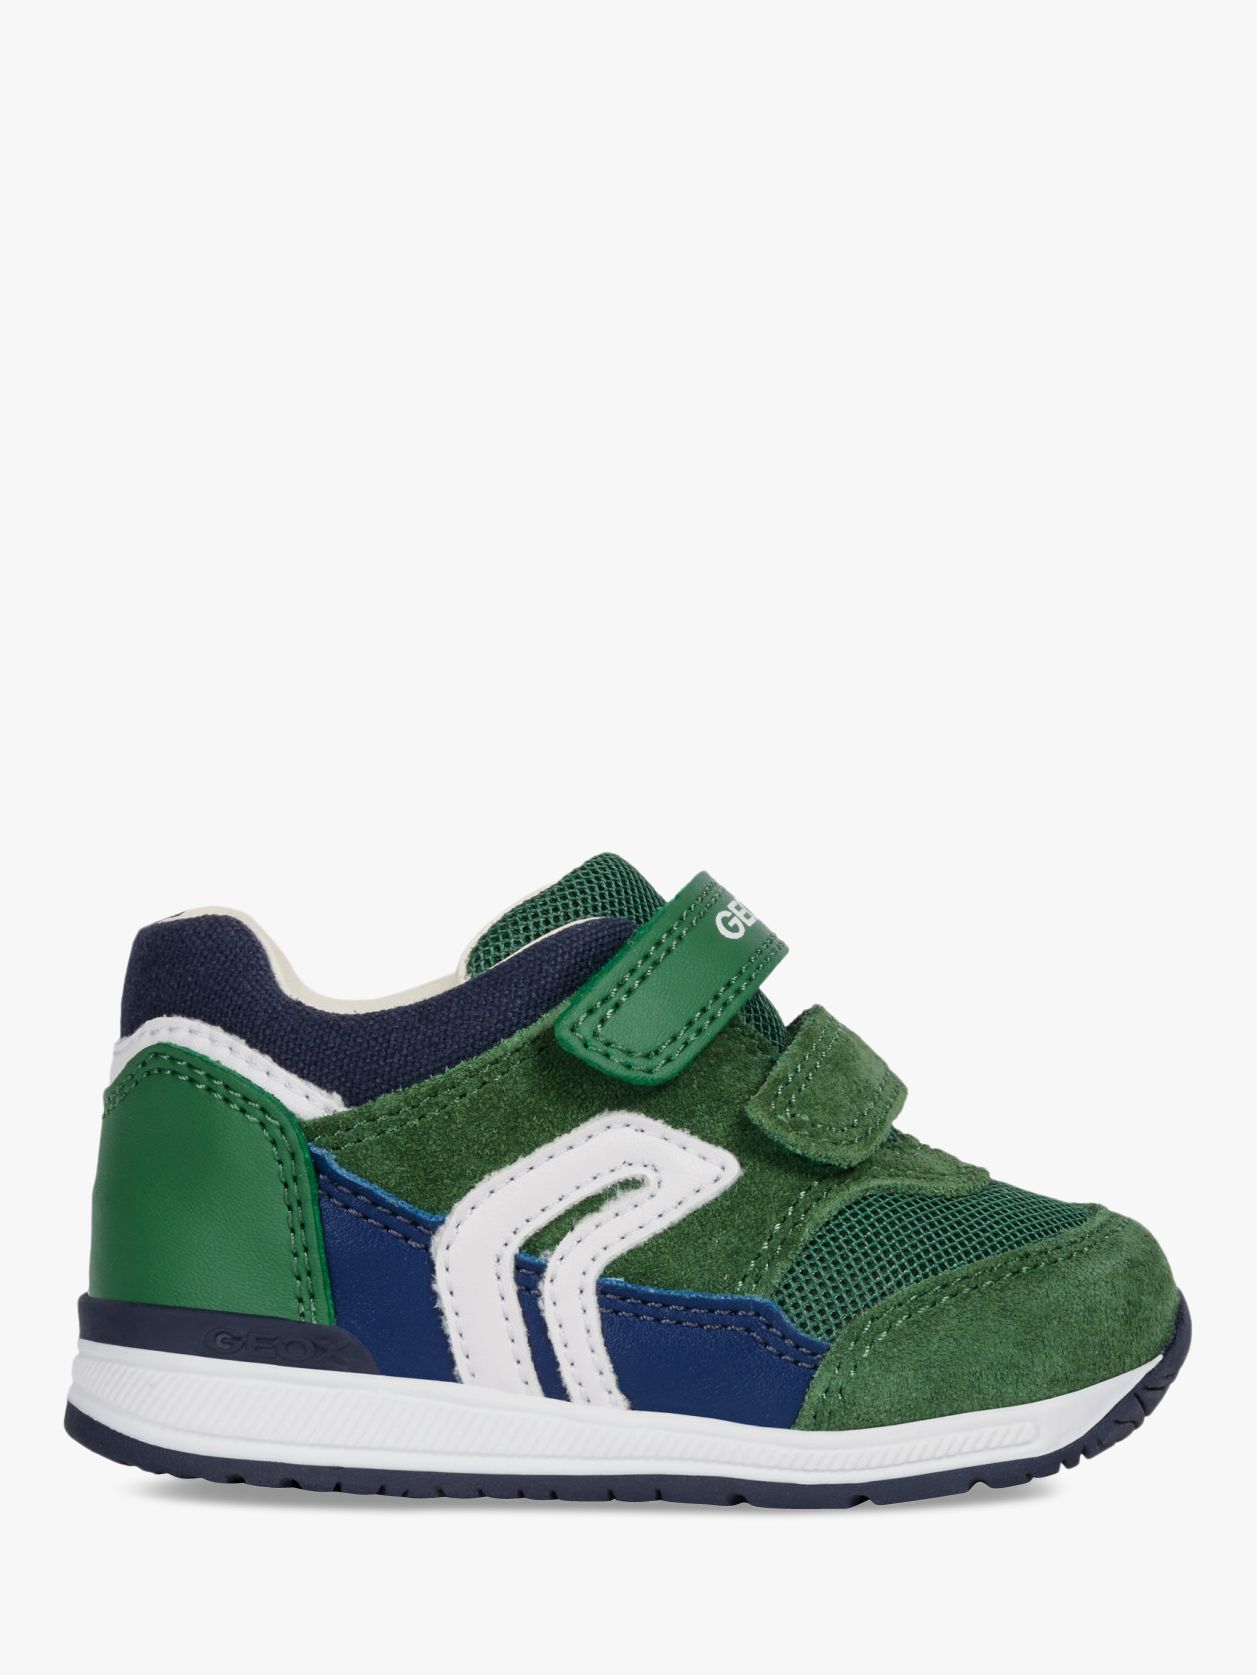 Geox Children's Rishon Shoes, Green/Navy